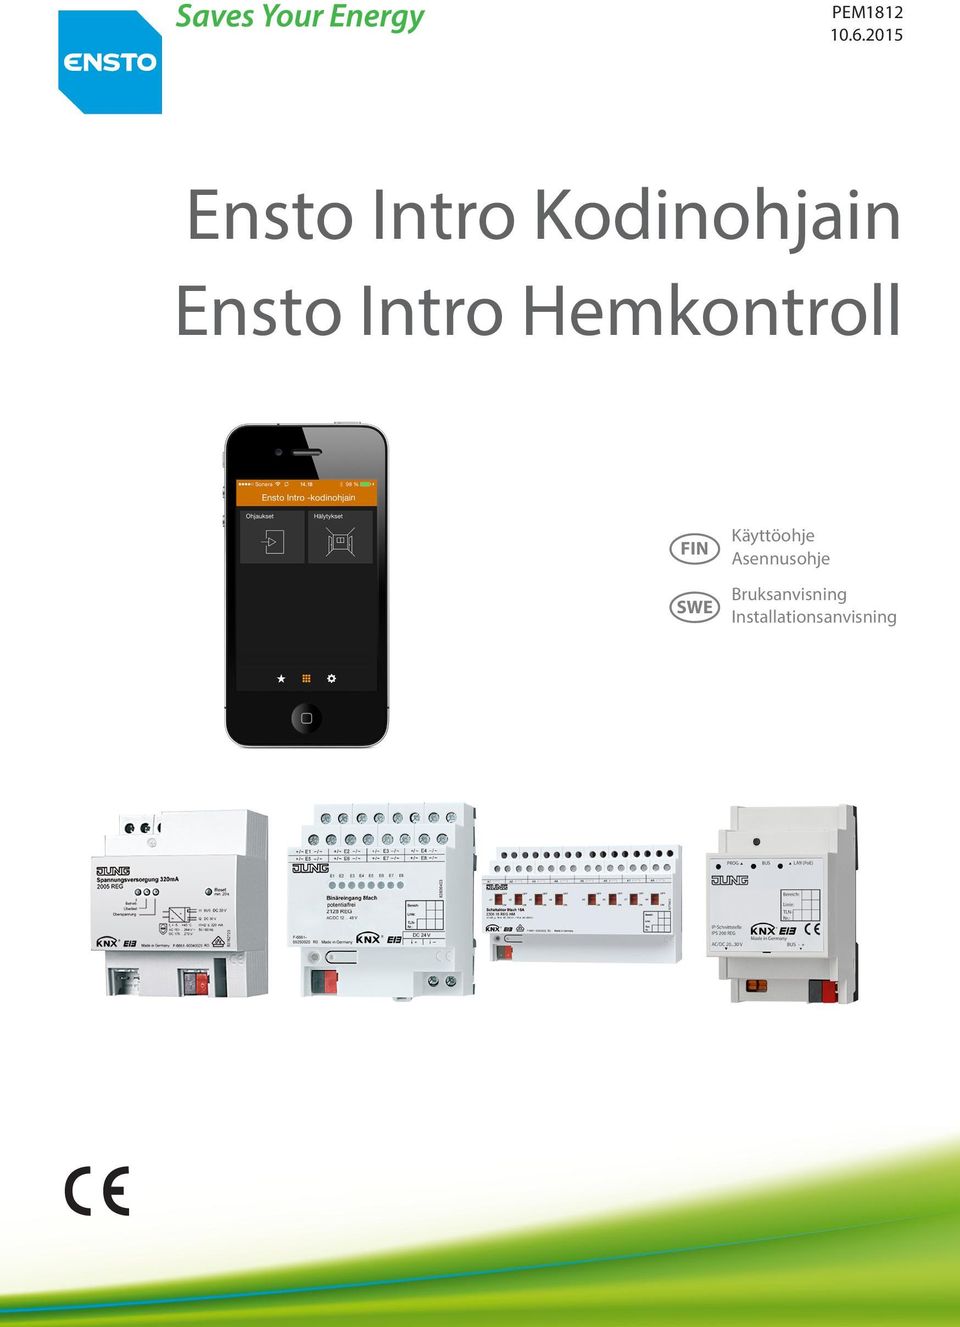 Ensto Intro Hemkontroll FIN SWE